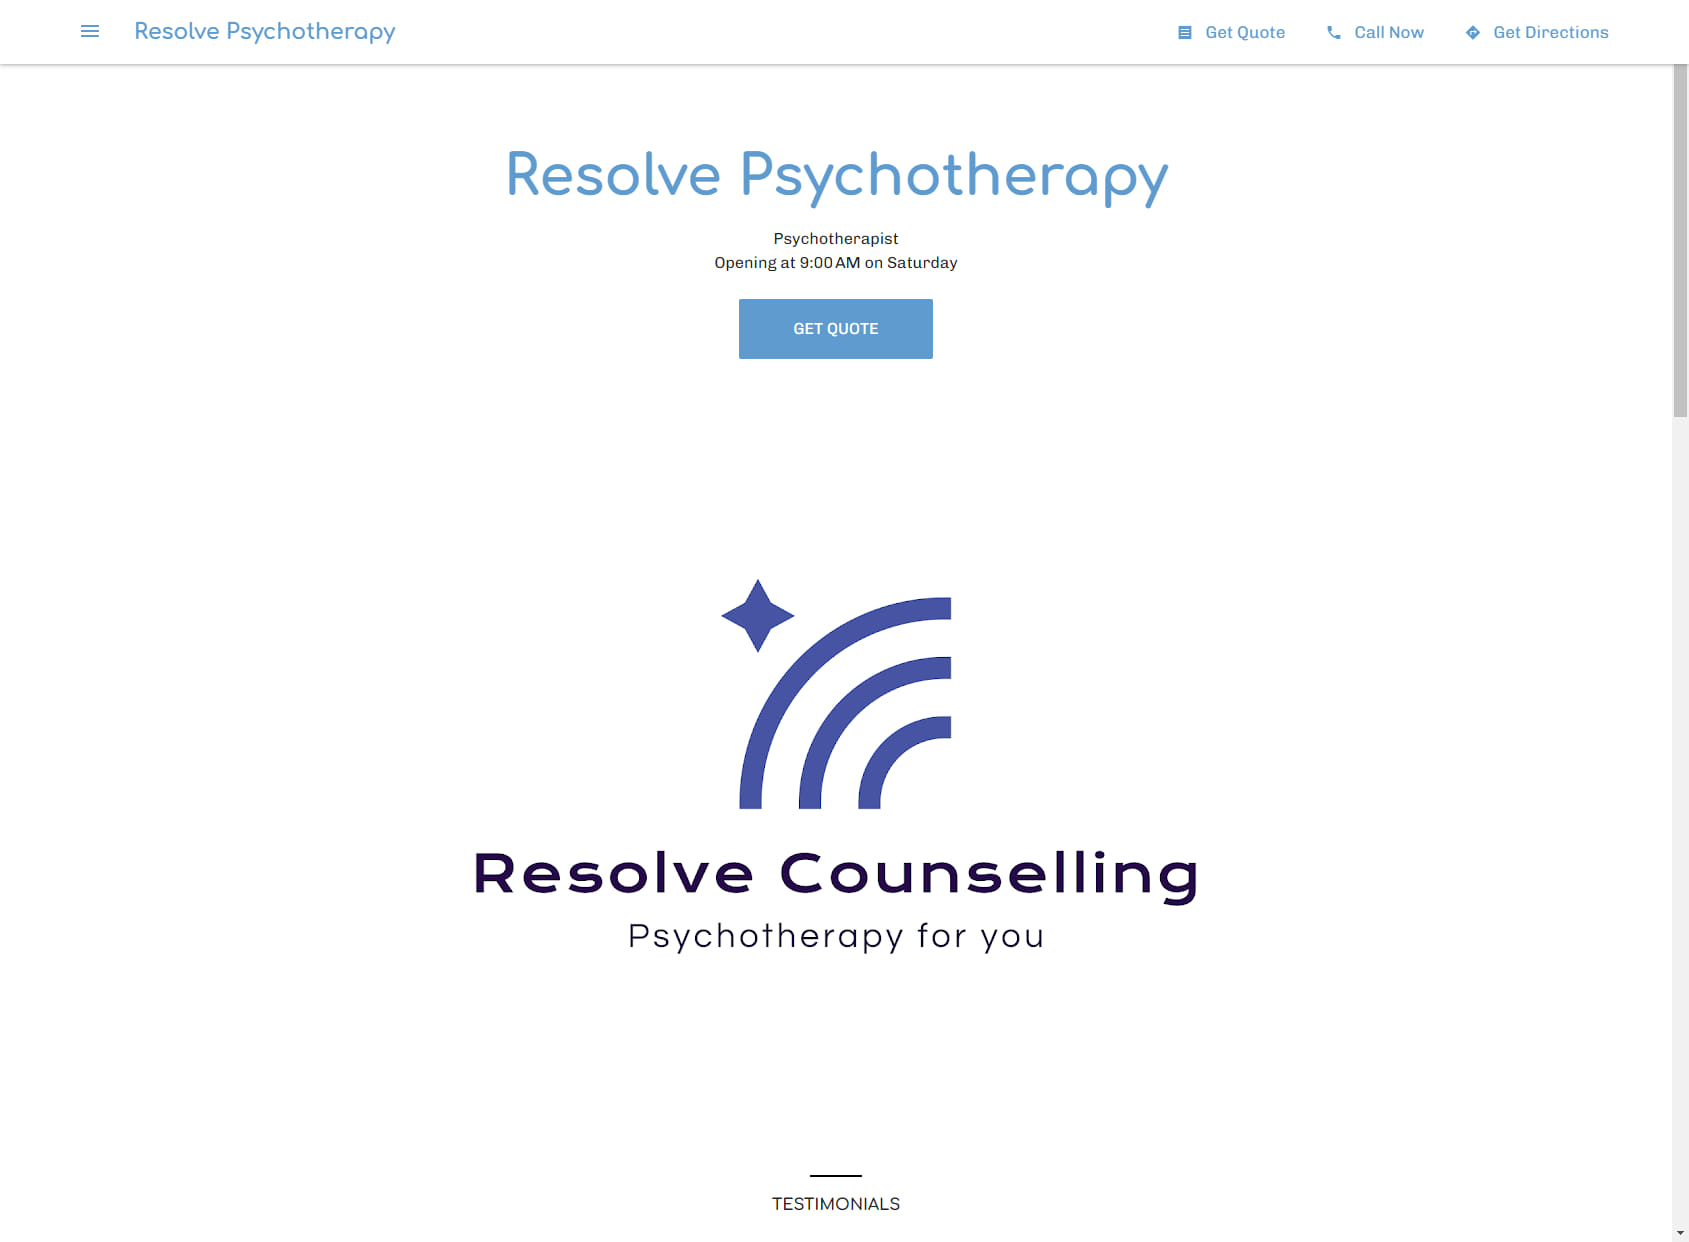 Resolve Psychotherapy